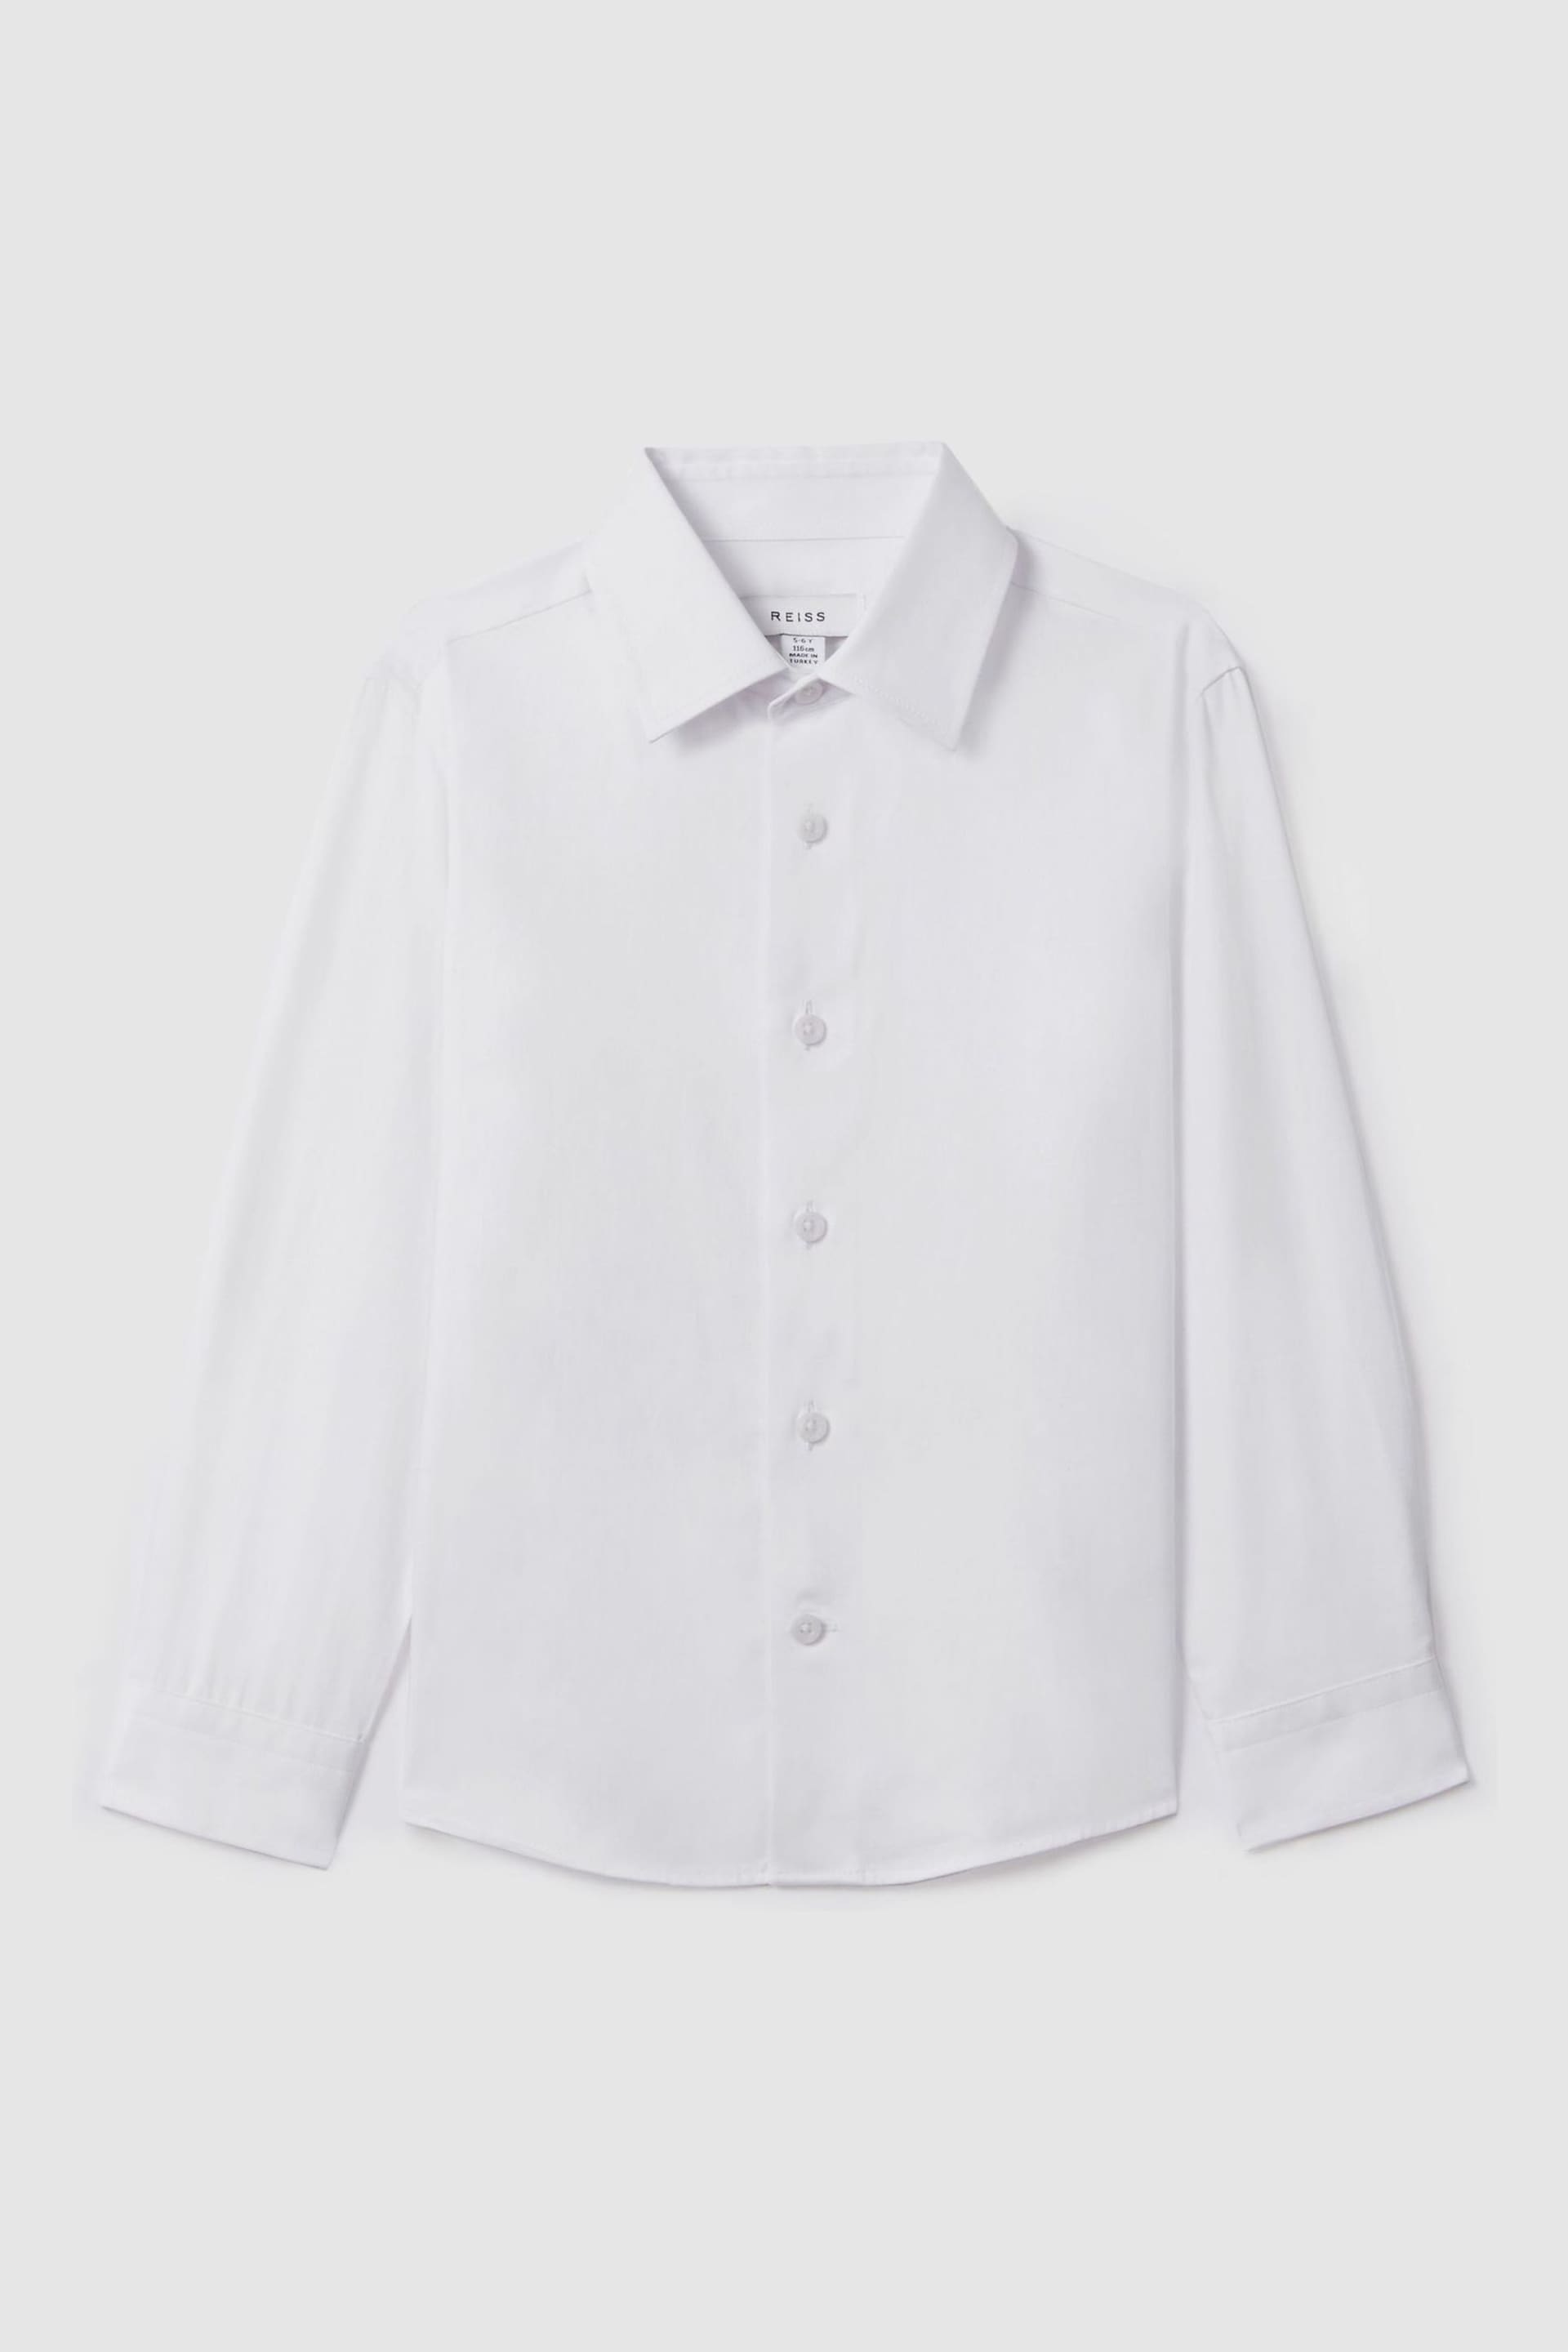 Reiss White Remote Junior Slim Fit Cotton Shirt - Image 2 of 6